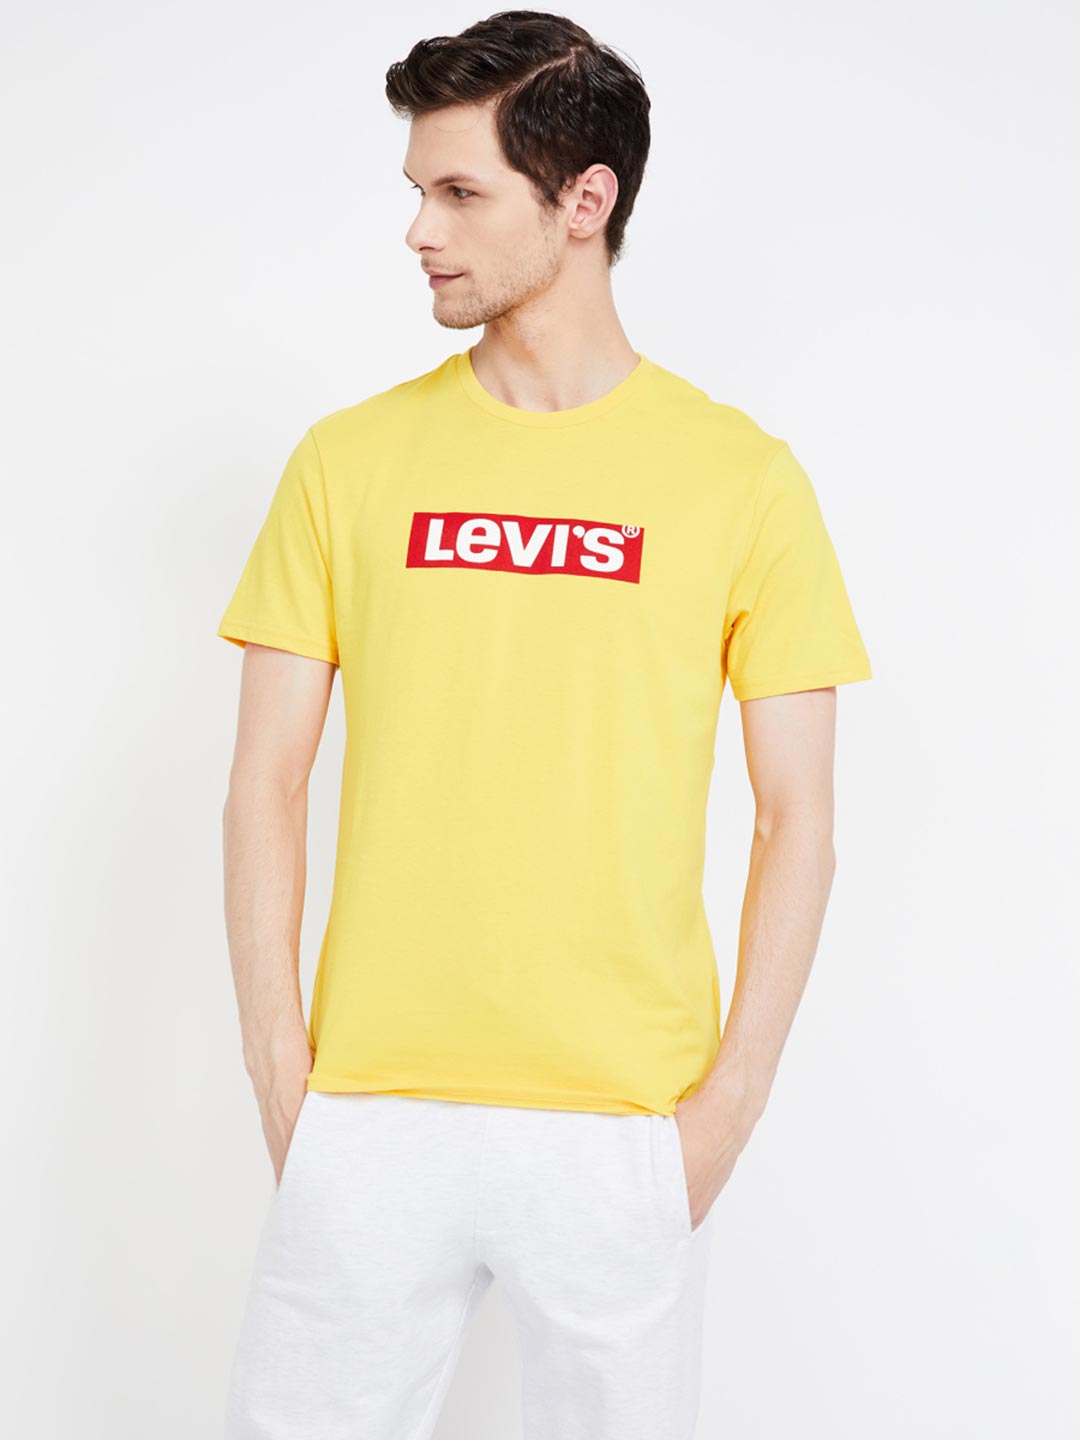 levis shirt yellow